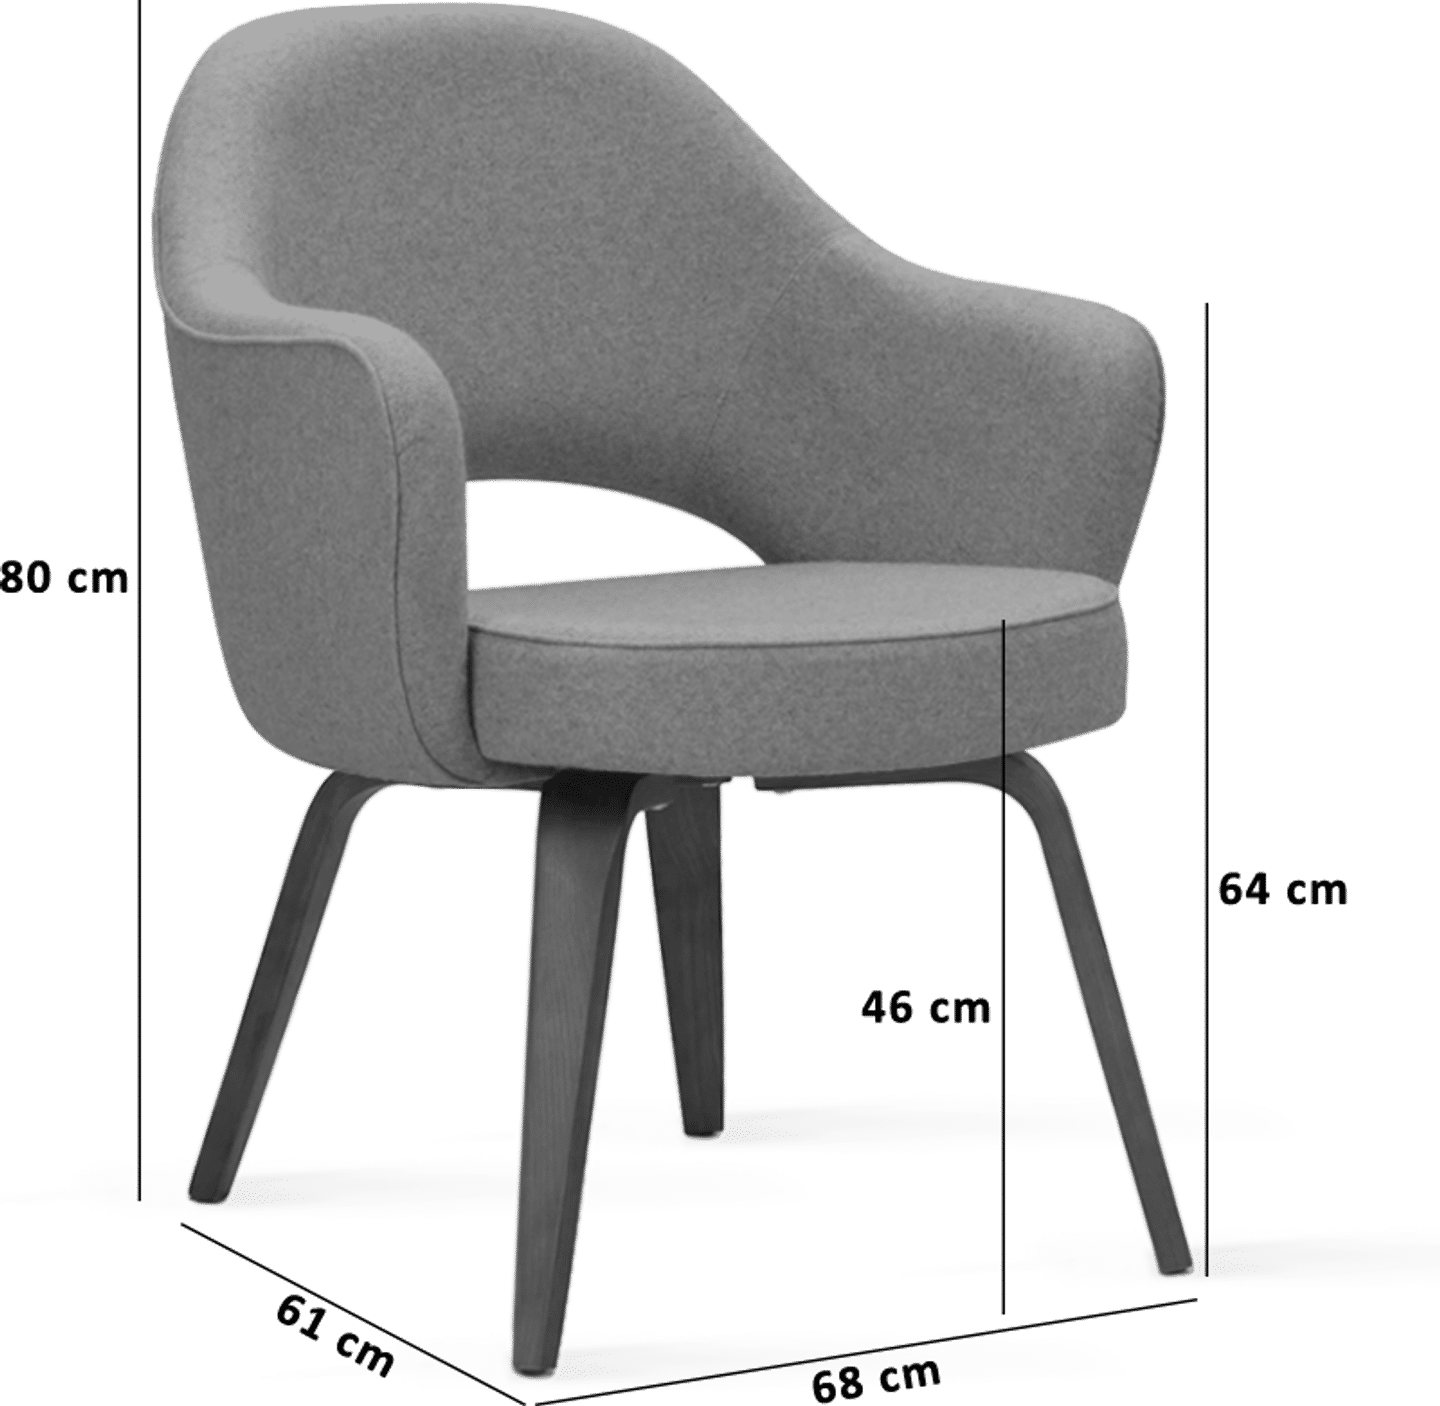 Executive Chair - With Arms Light Pebble Grey image.